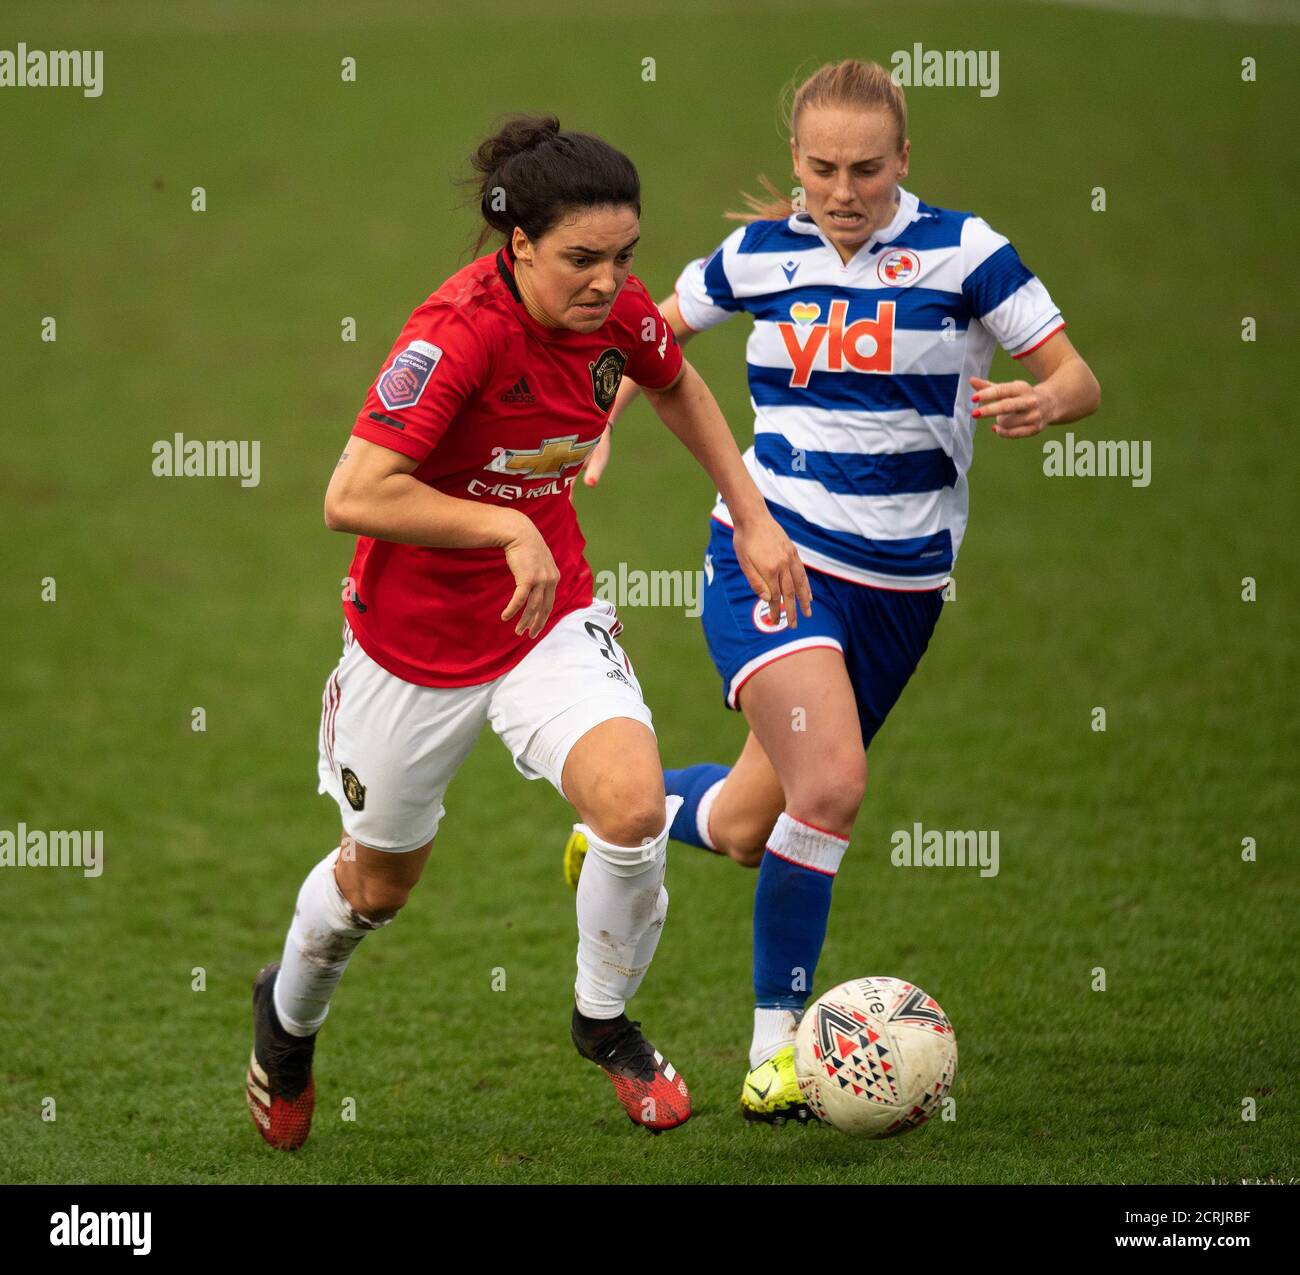 Manchester United's Jessica Sigsworth    PHOTO CREDIT : © MARK PAIN / ALAMY STOCK PHOTO Stock Photo